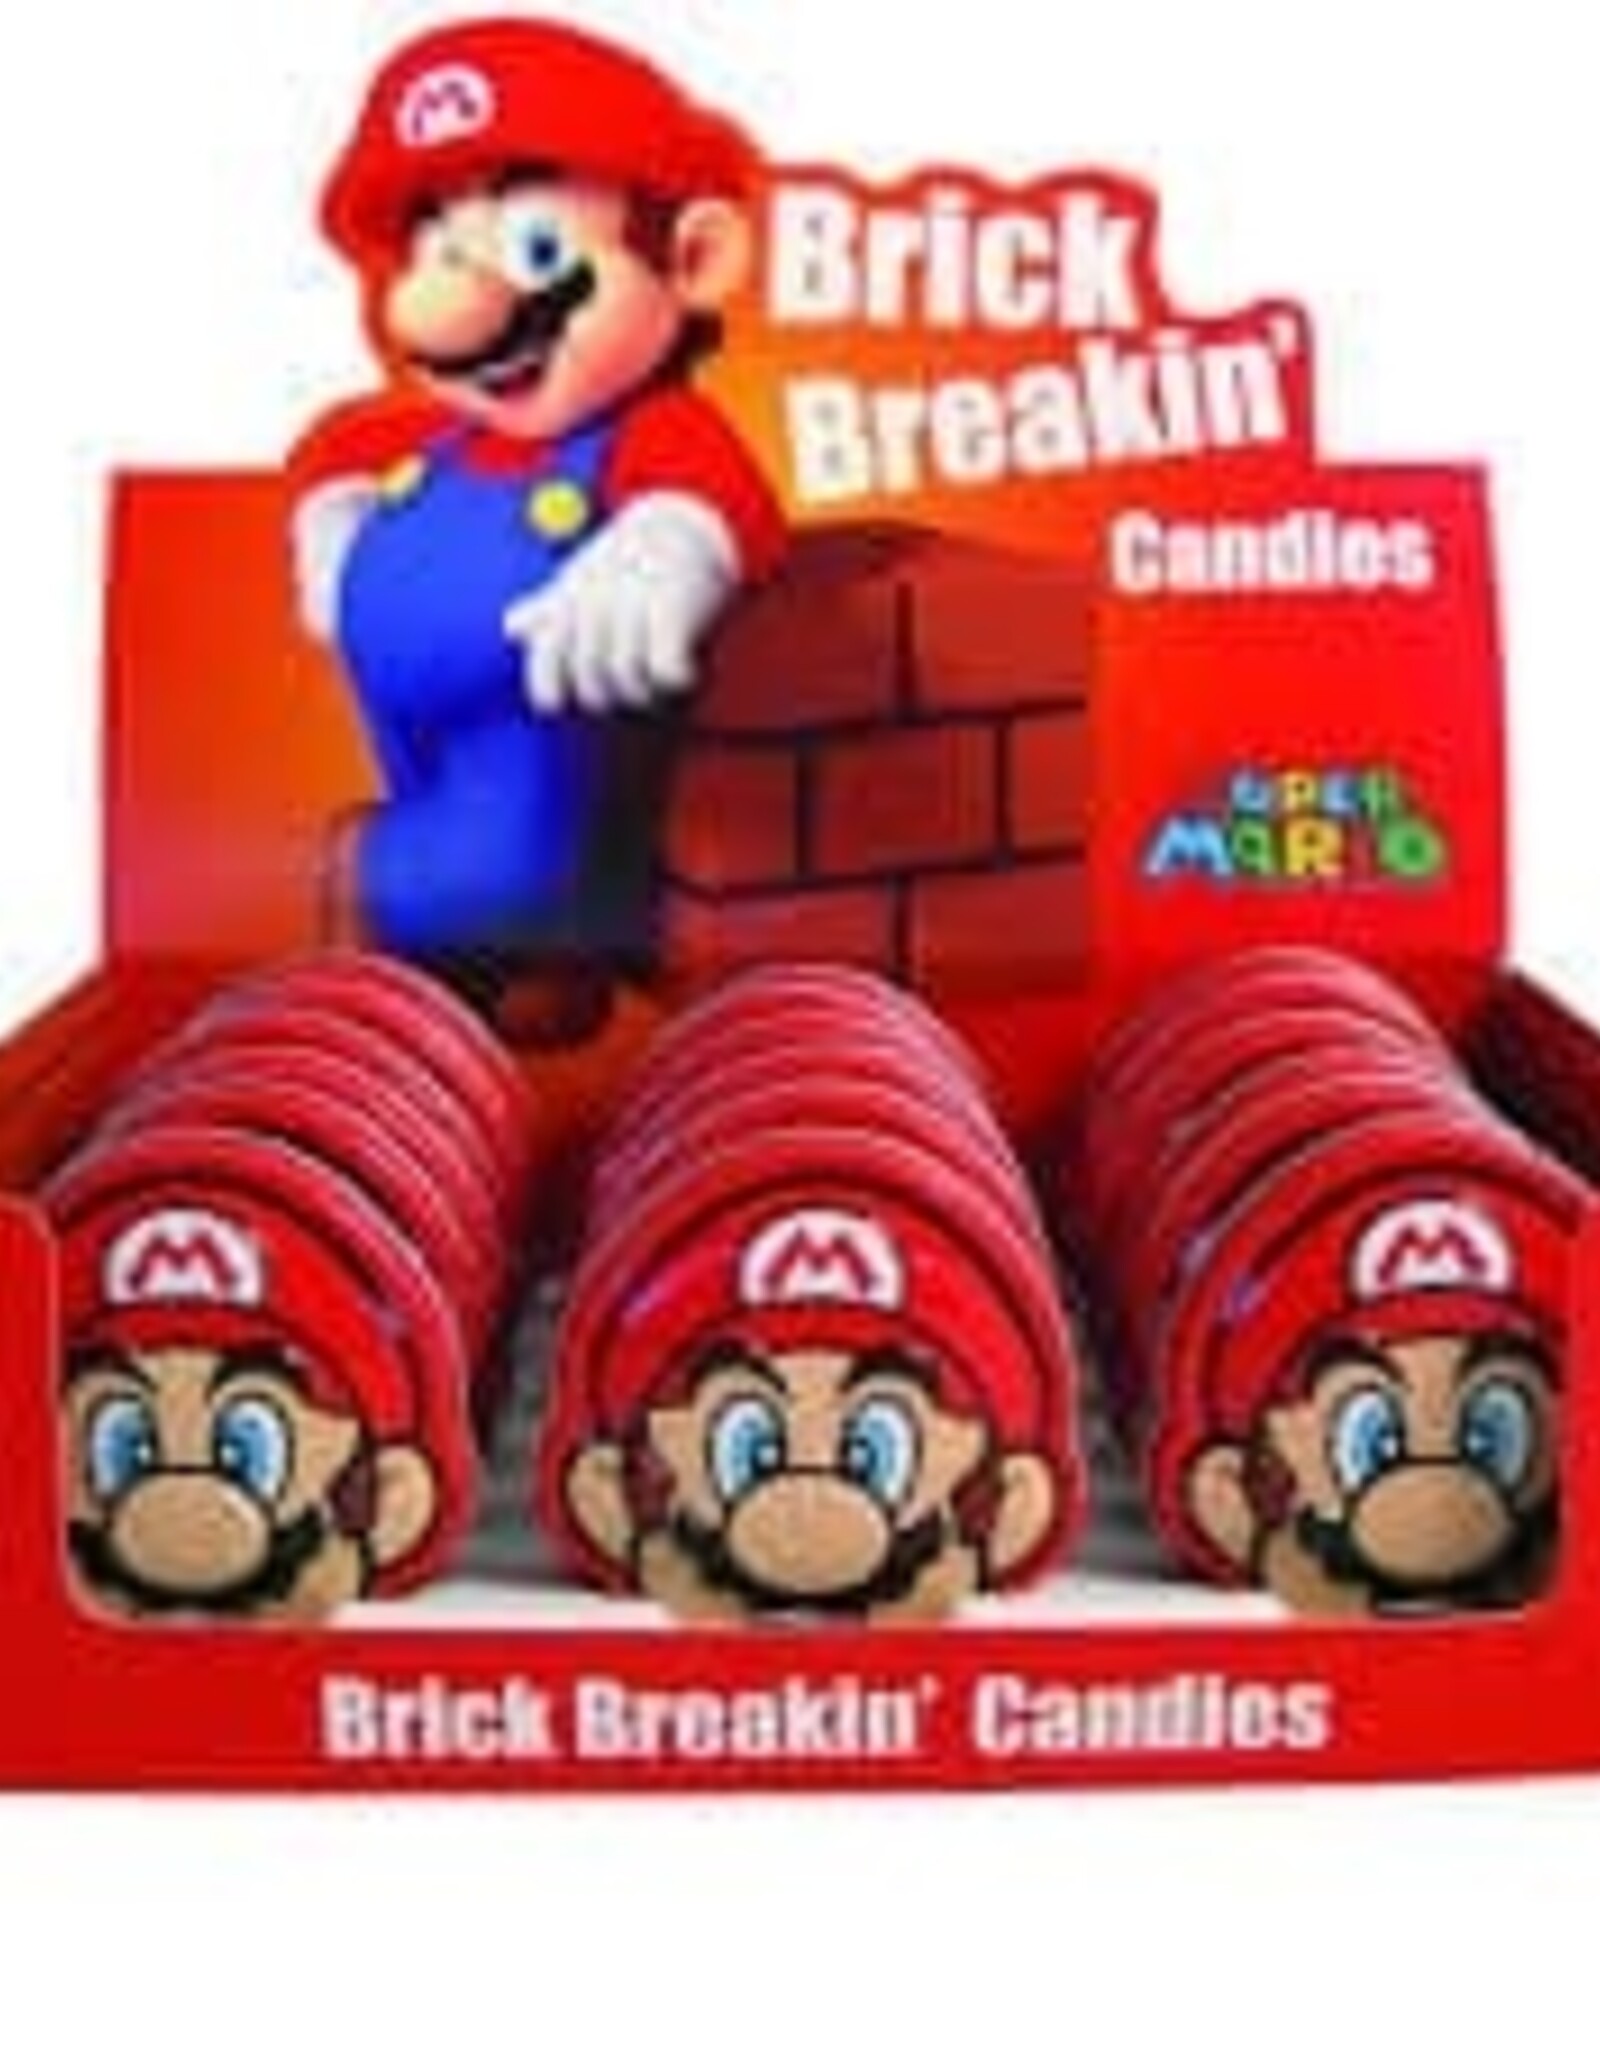 Boston America Nintendo Super Mario Brick Breakin